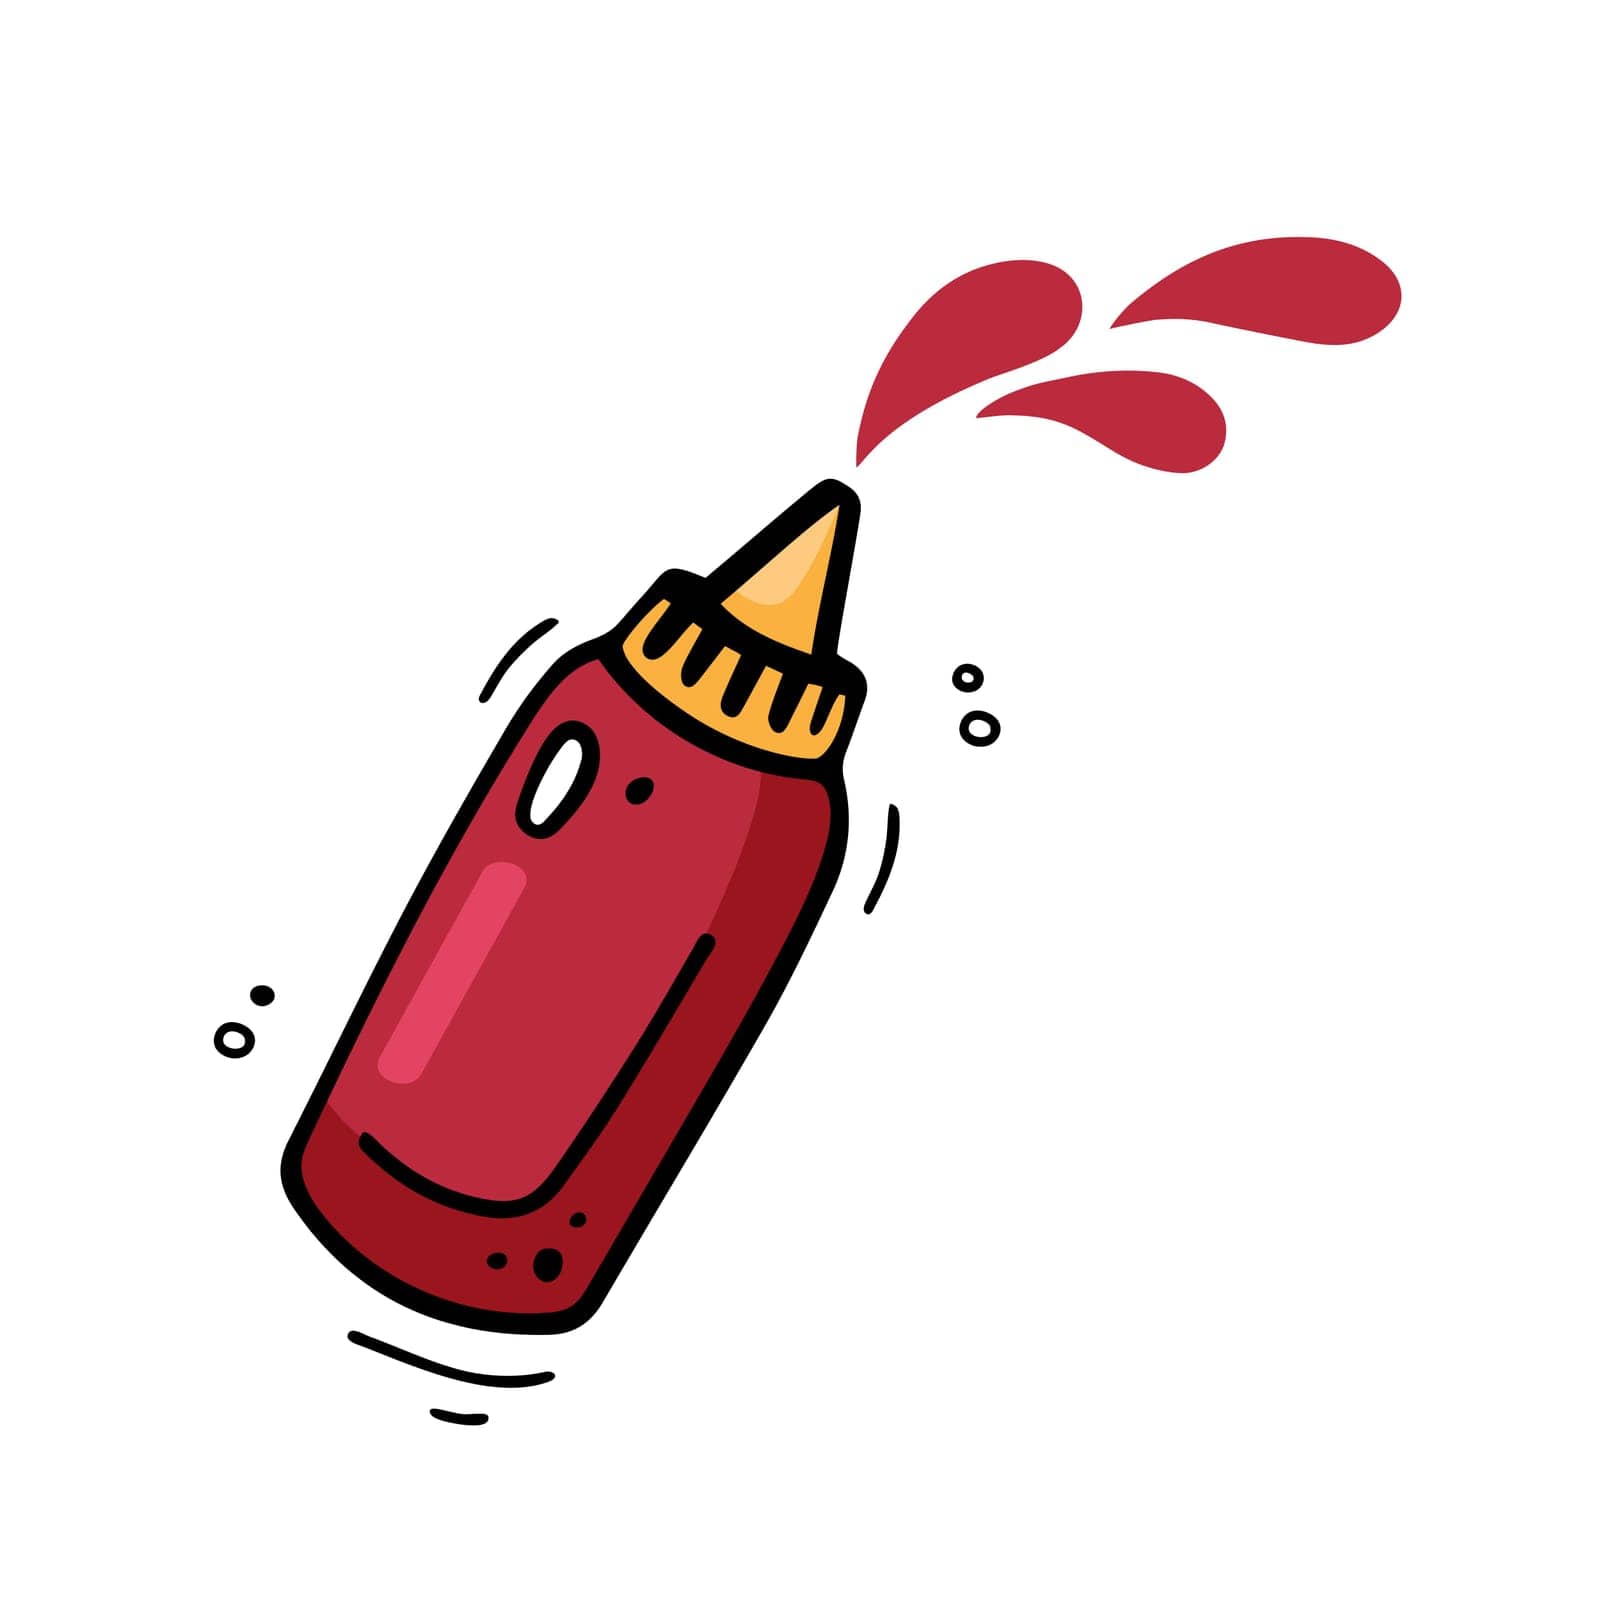 Hand drawn ketchup bottle. Fast food illustration in doodle style. Sketch of sauce bottle.